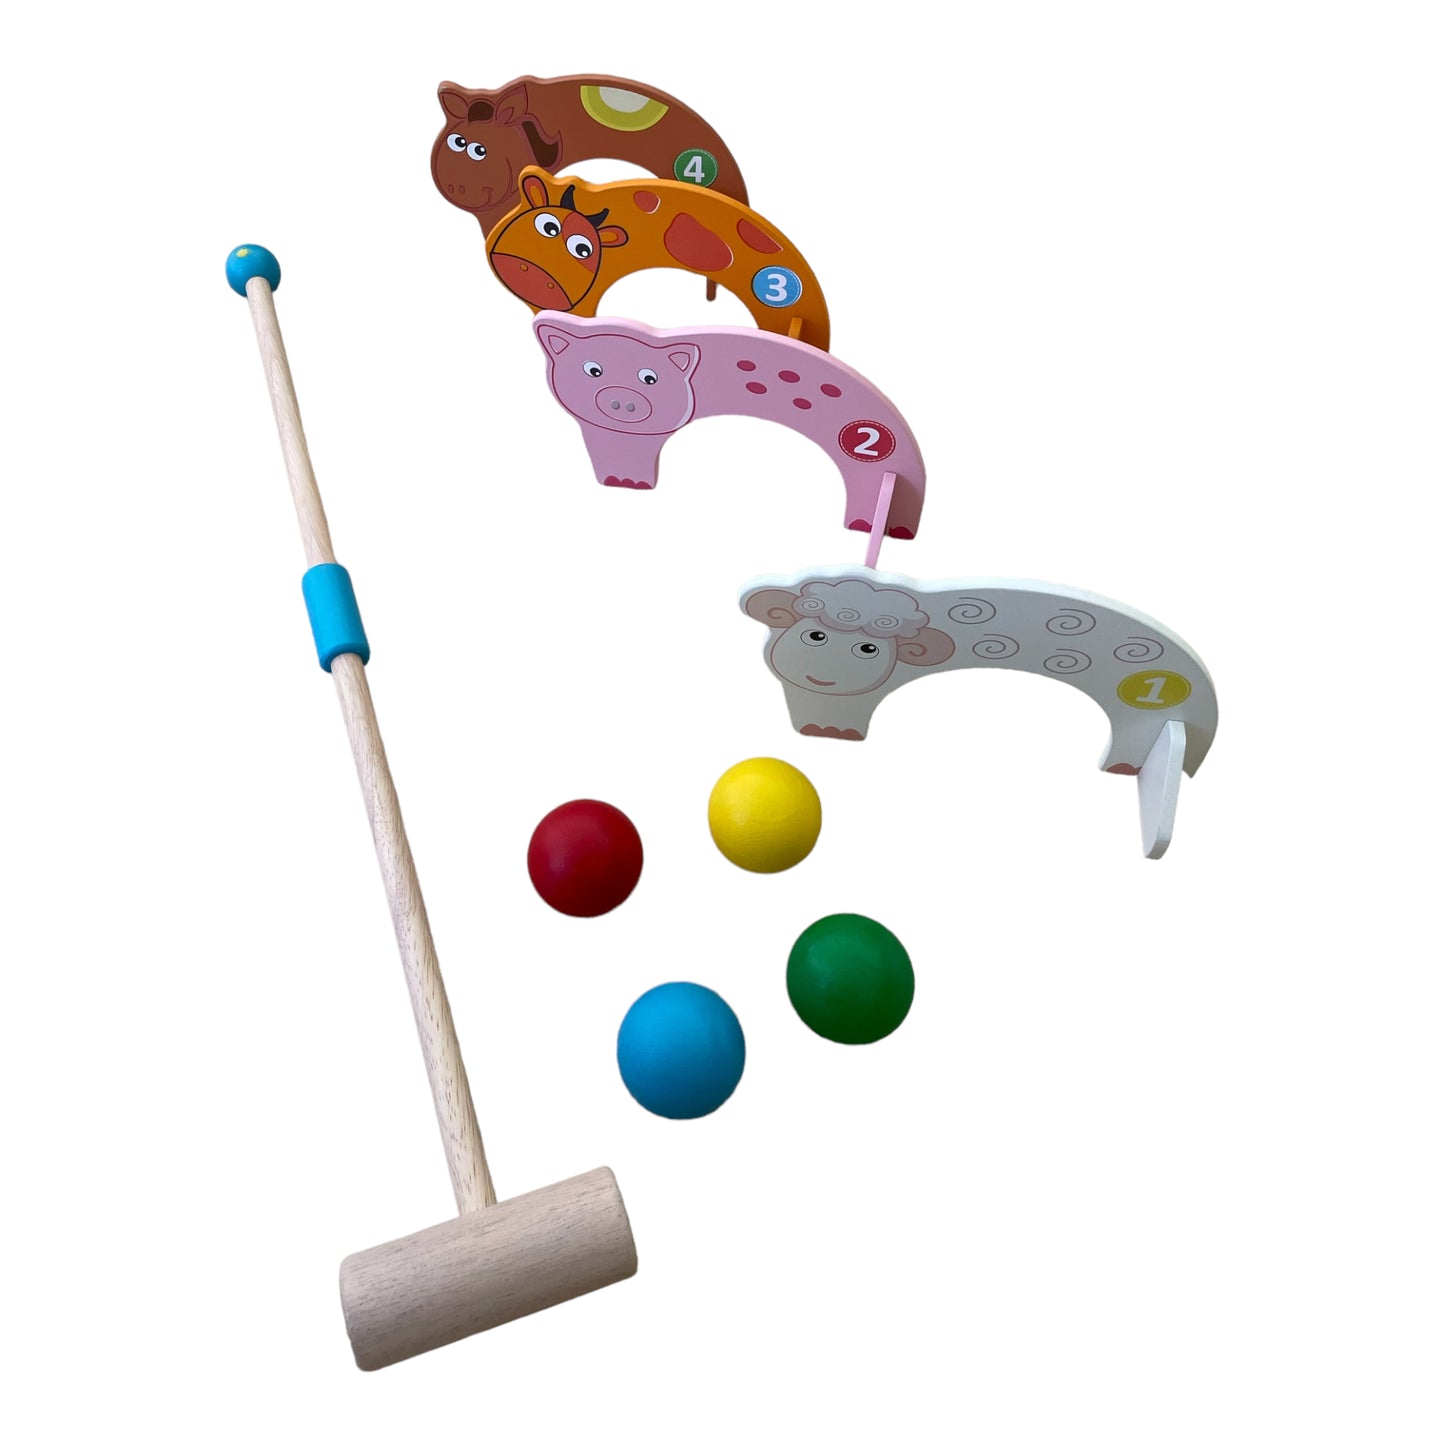 Wooden croquet set for kids - Spielba